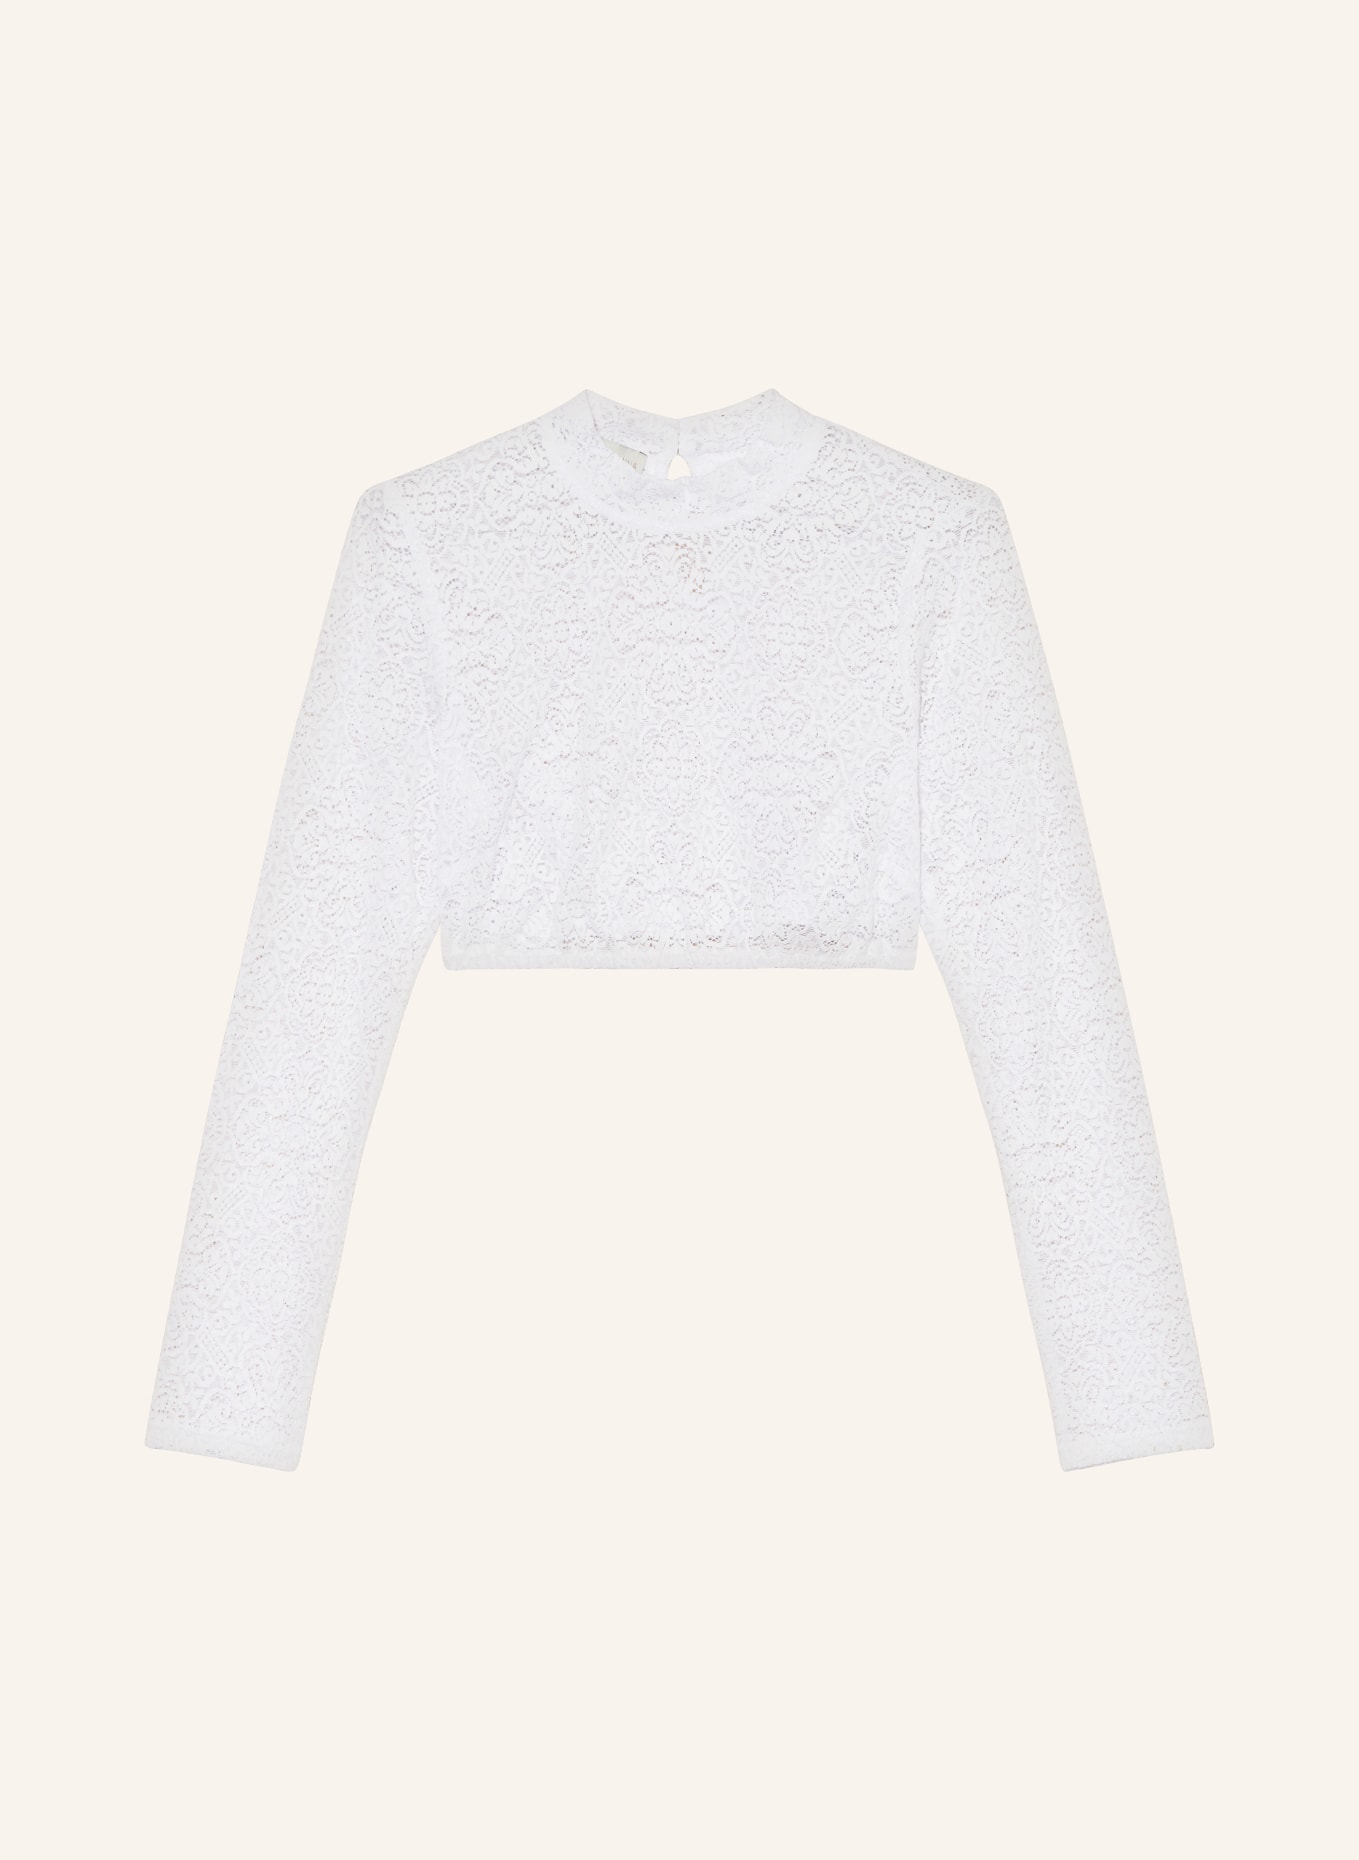 Johann & Johanna Dirndl blouse made of lace, Color: WHITE (Image 1)